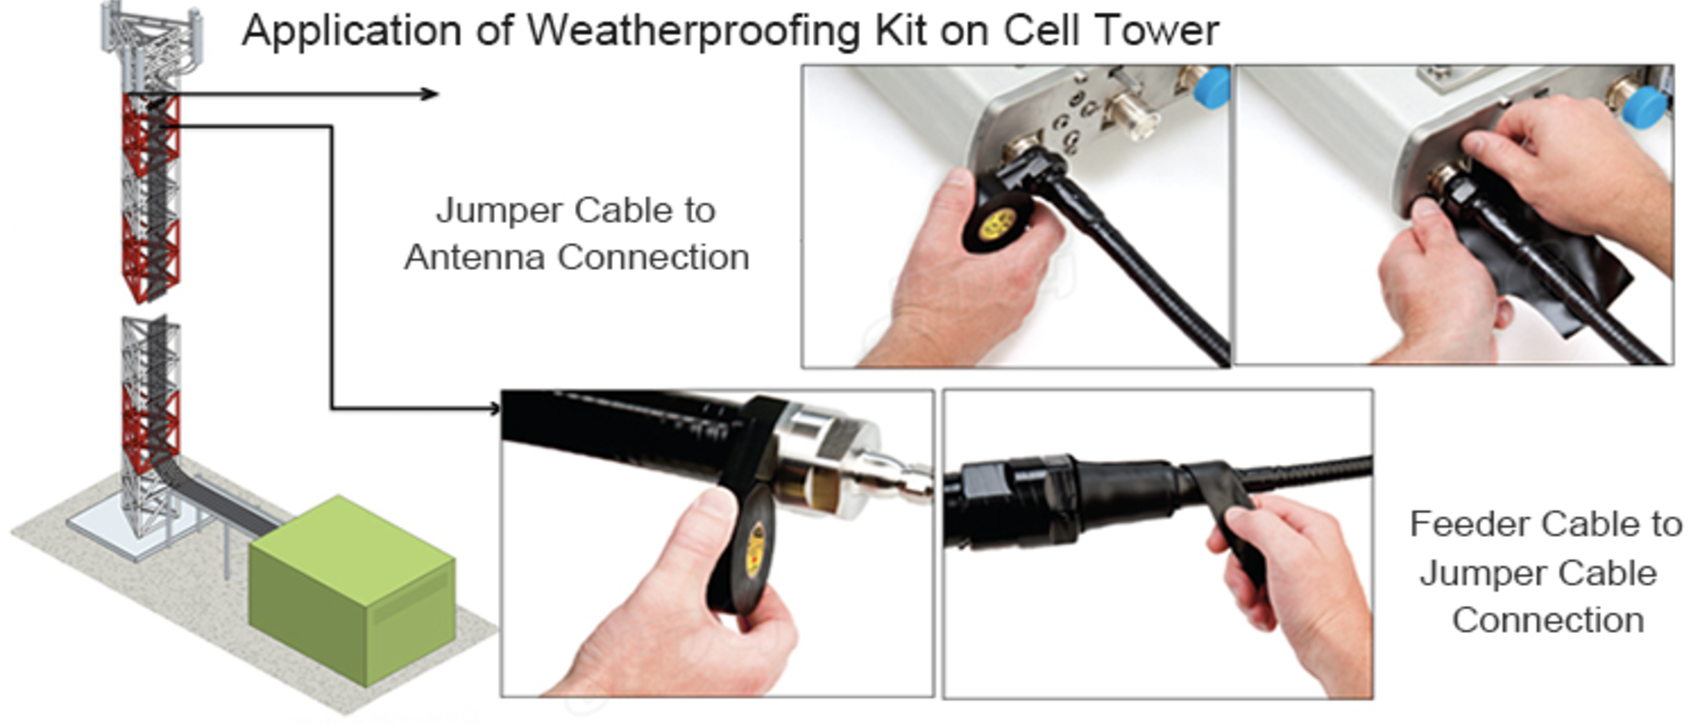 application of weatherproof kit